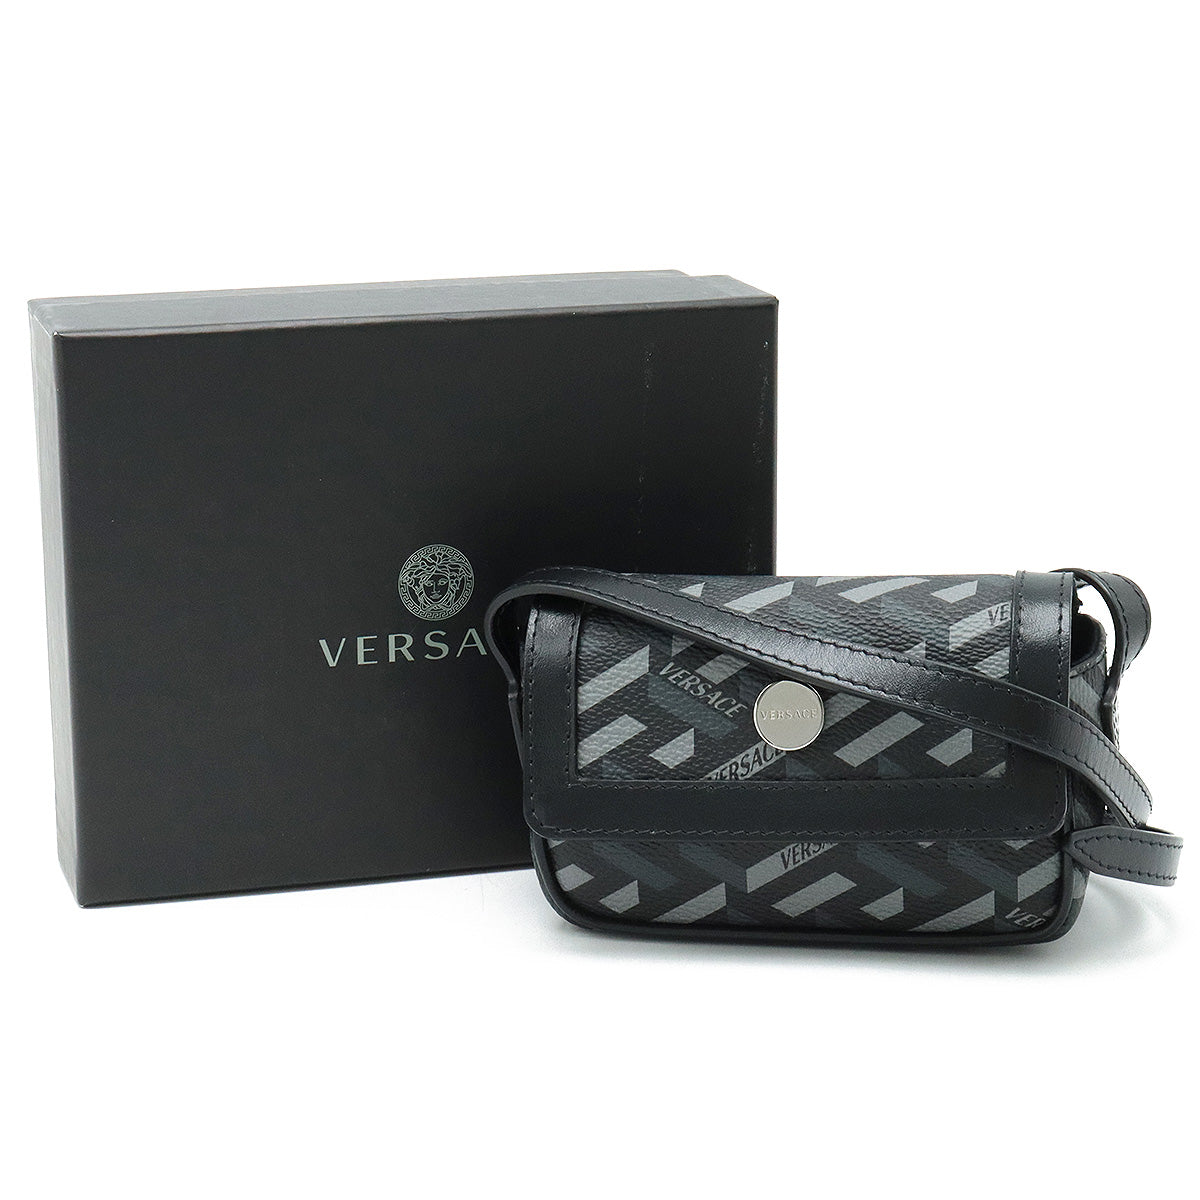 Versace Versace La Grecca Mini Shoulder Bag Pvc Leather Grey Black Black Silver Gold